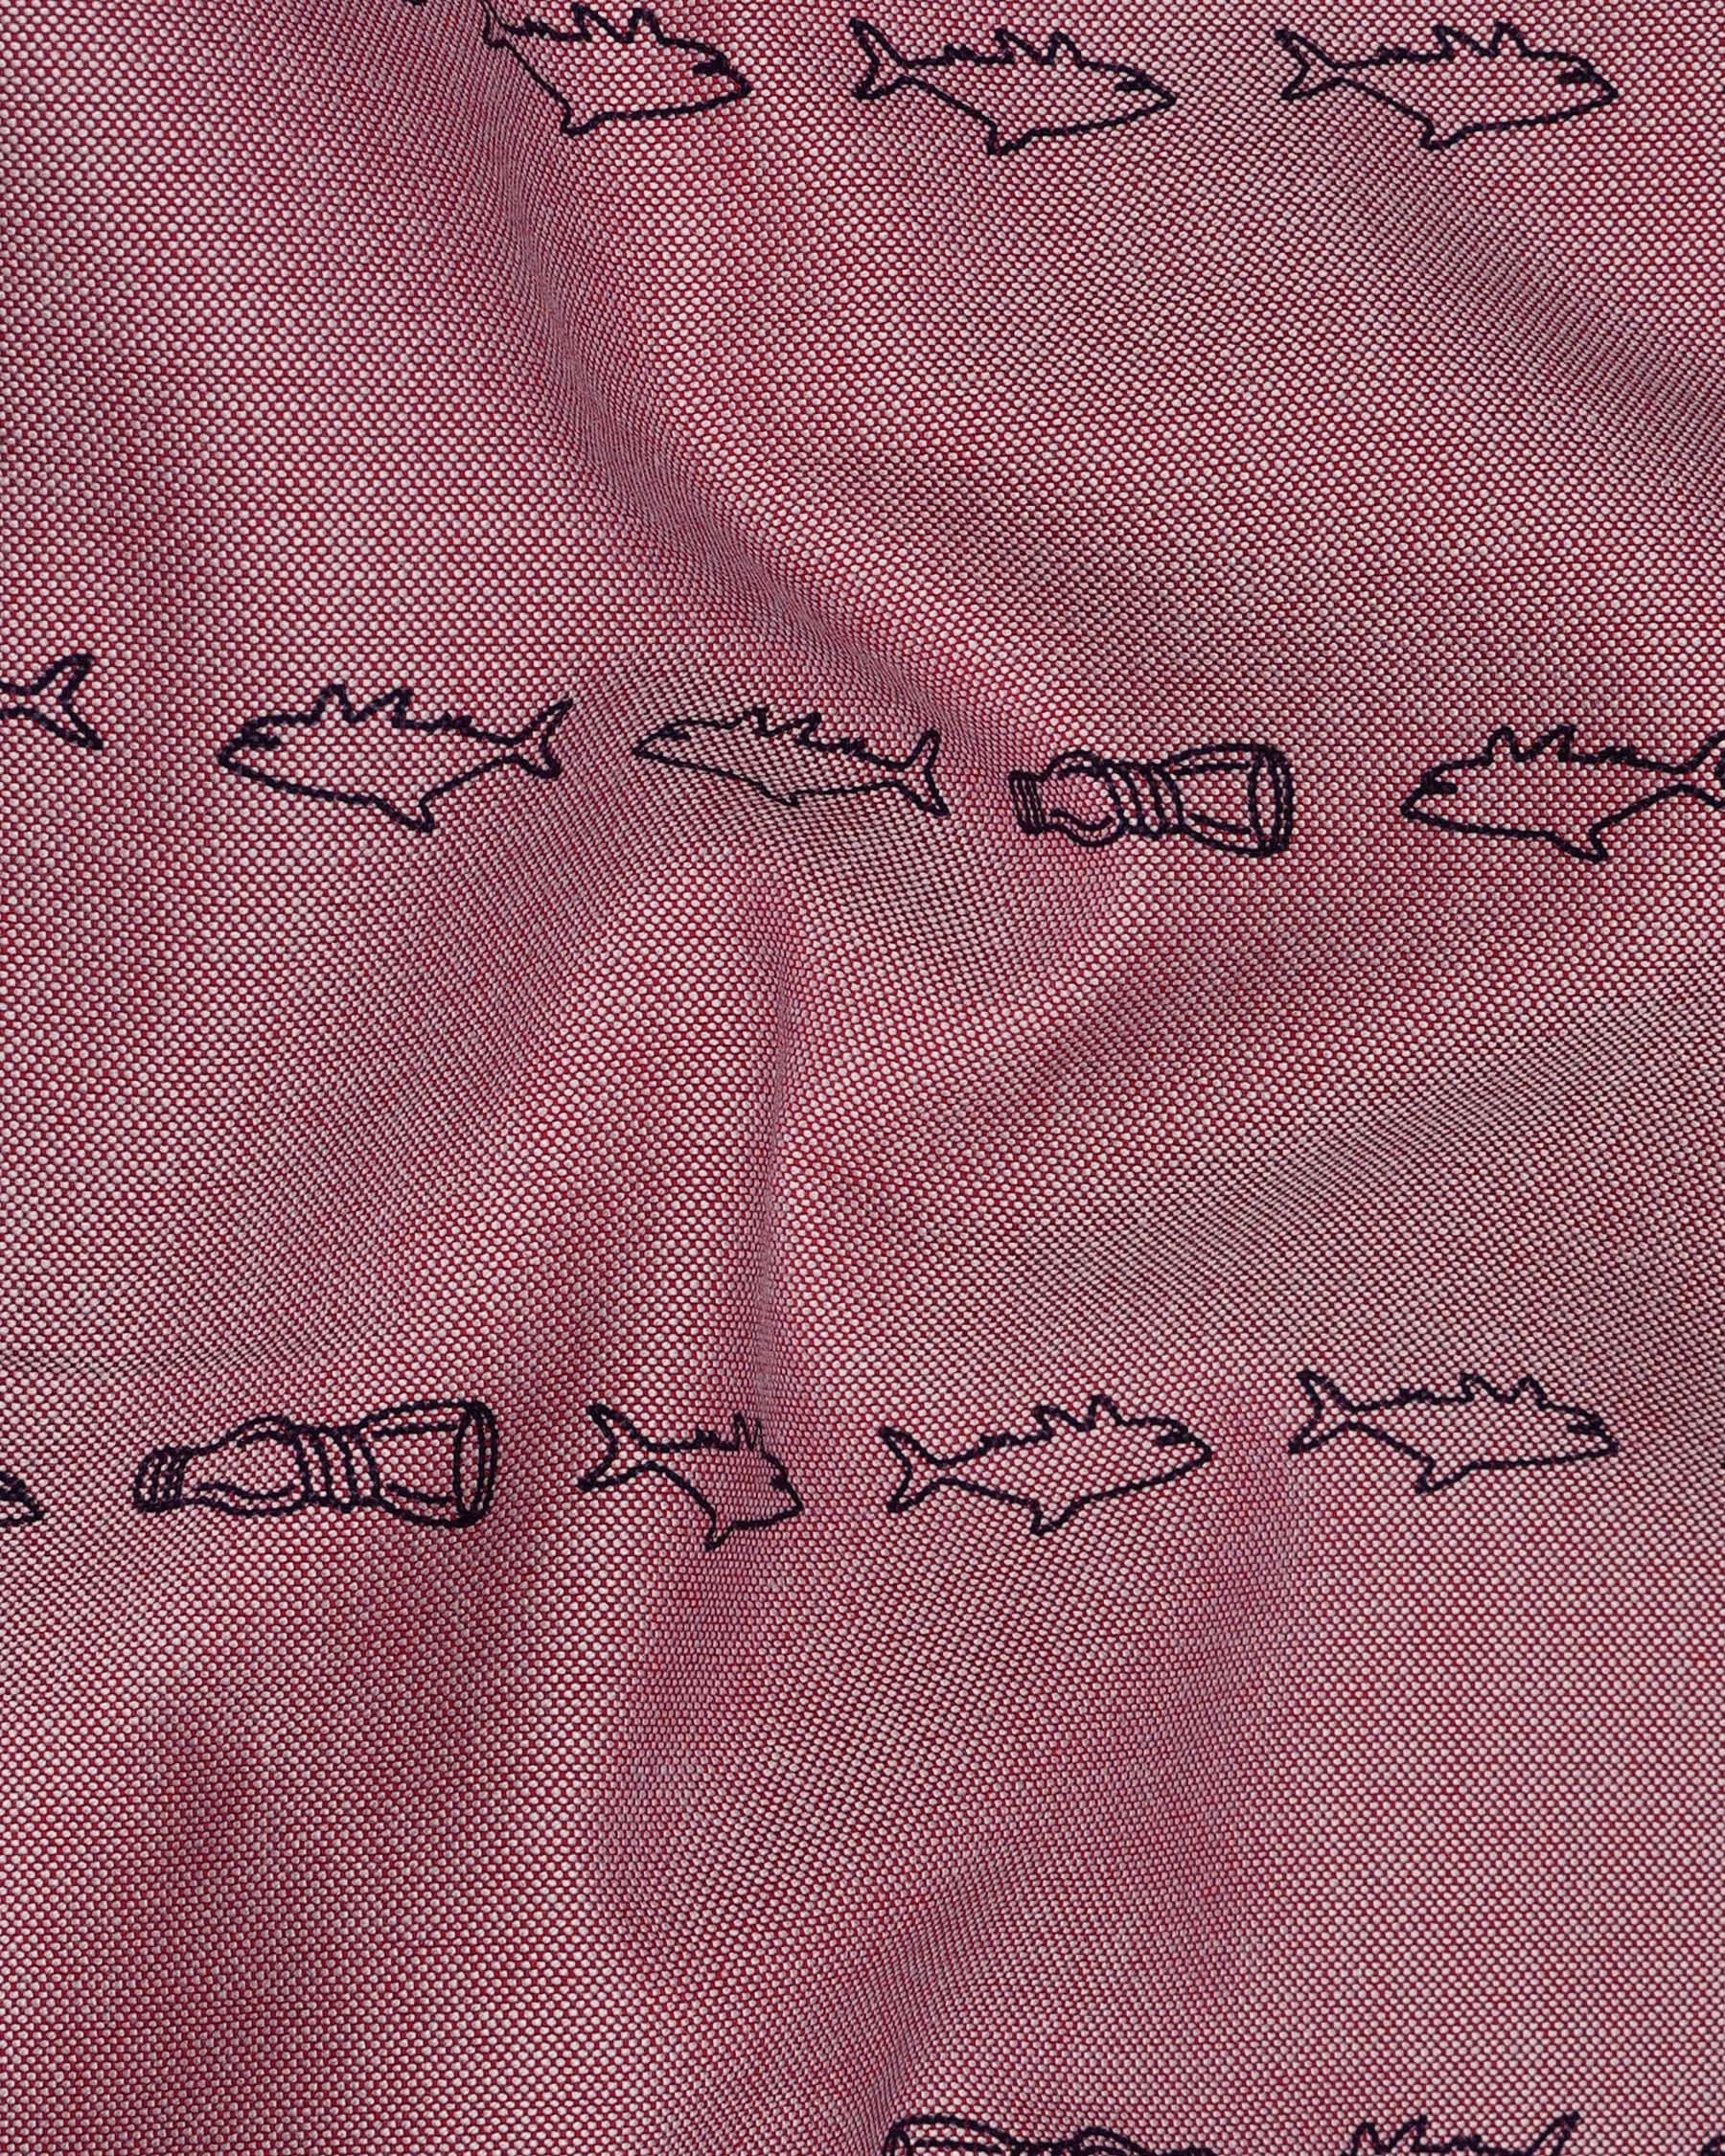 Falcon Pink With Navy Blue Fish Printed Royal Oxford Shirt 7896-BD-BLK -38,7896-BD-BLK -H-38,7896-BD-BLK -39,7896-BD-BLK -H-39,7896-BD-BLK -40,7896-BD-BLK -H-40,7896-BD-BLK -42,7896-BD-BLK -H-42,7896-BD-BLK -44,7896-BD-BLK -H-44,7896-BD-BLK -46,7896-BD-BLK -H-46,7896-BD-BLK -48,7896-BD-BLK -H-48,7896-BD-BLK -50,7896-BD-BLK -H-50,7896-BD-BLK -52,7896-BD-BLK -H-52